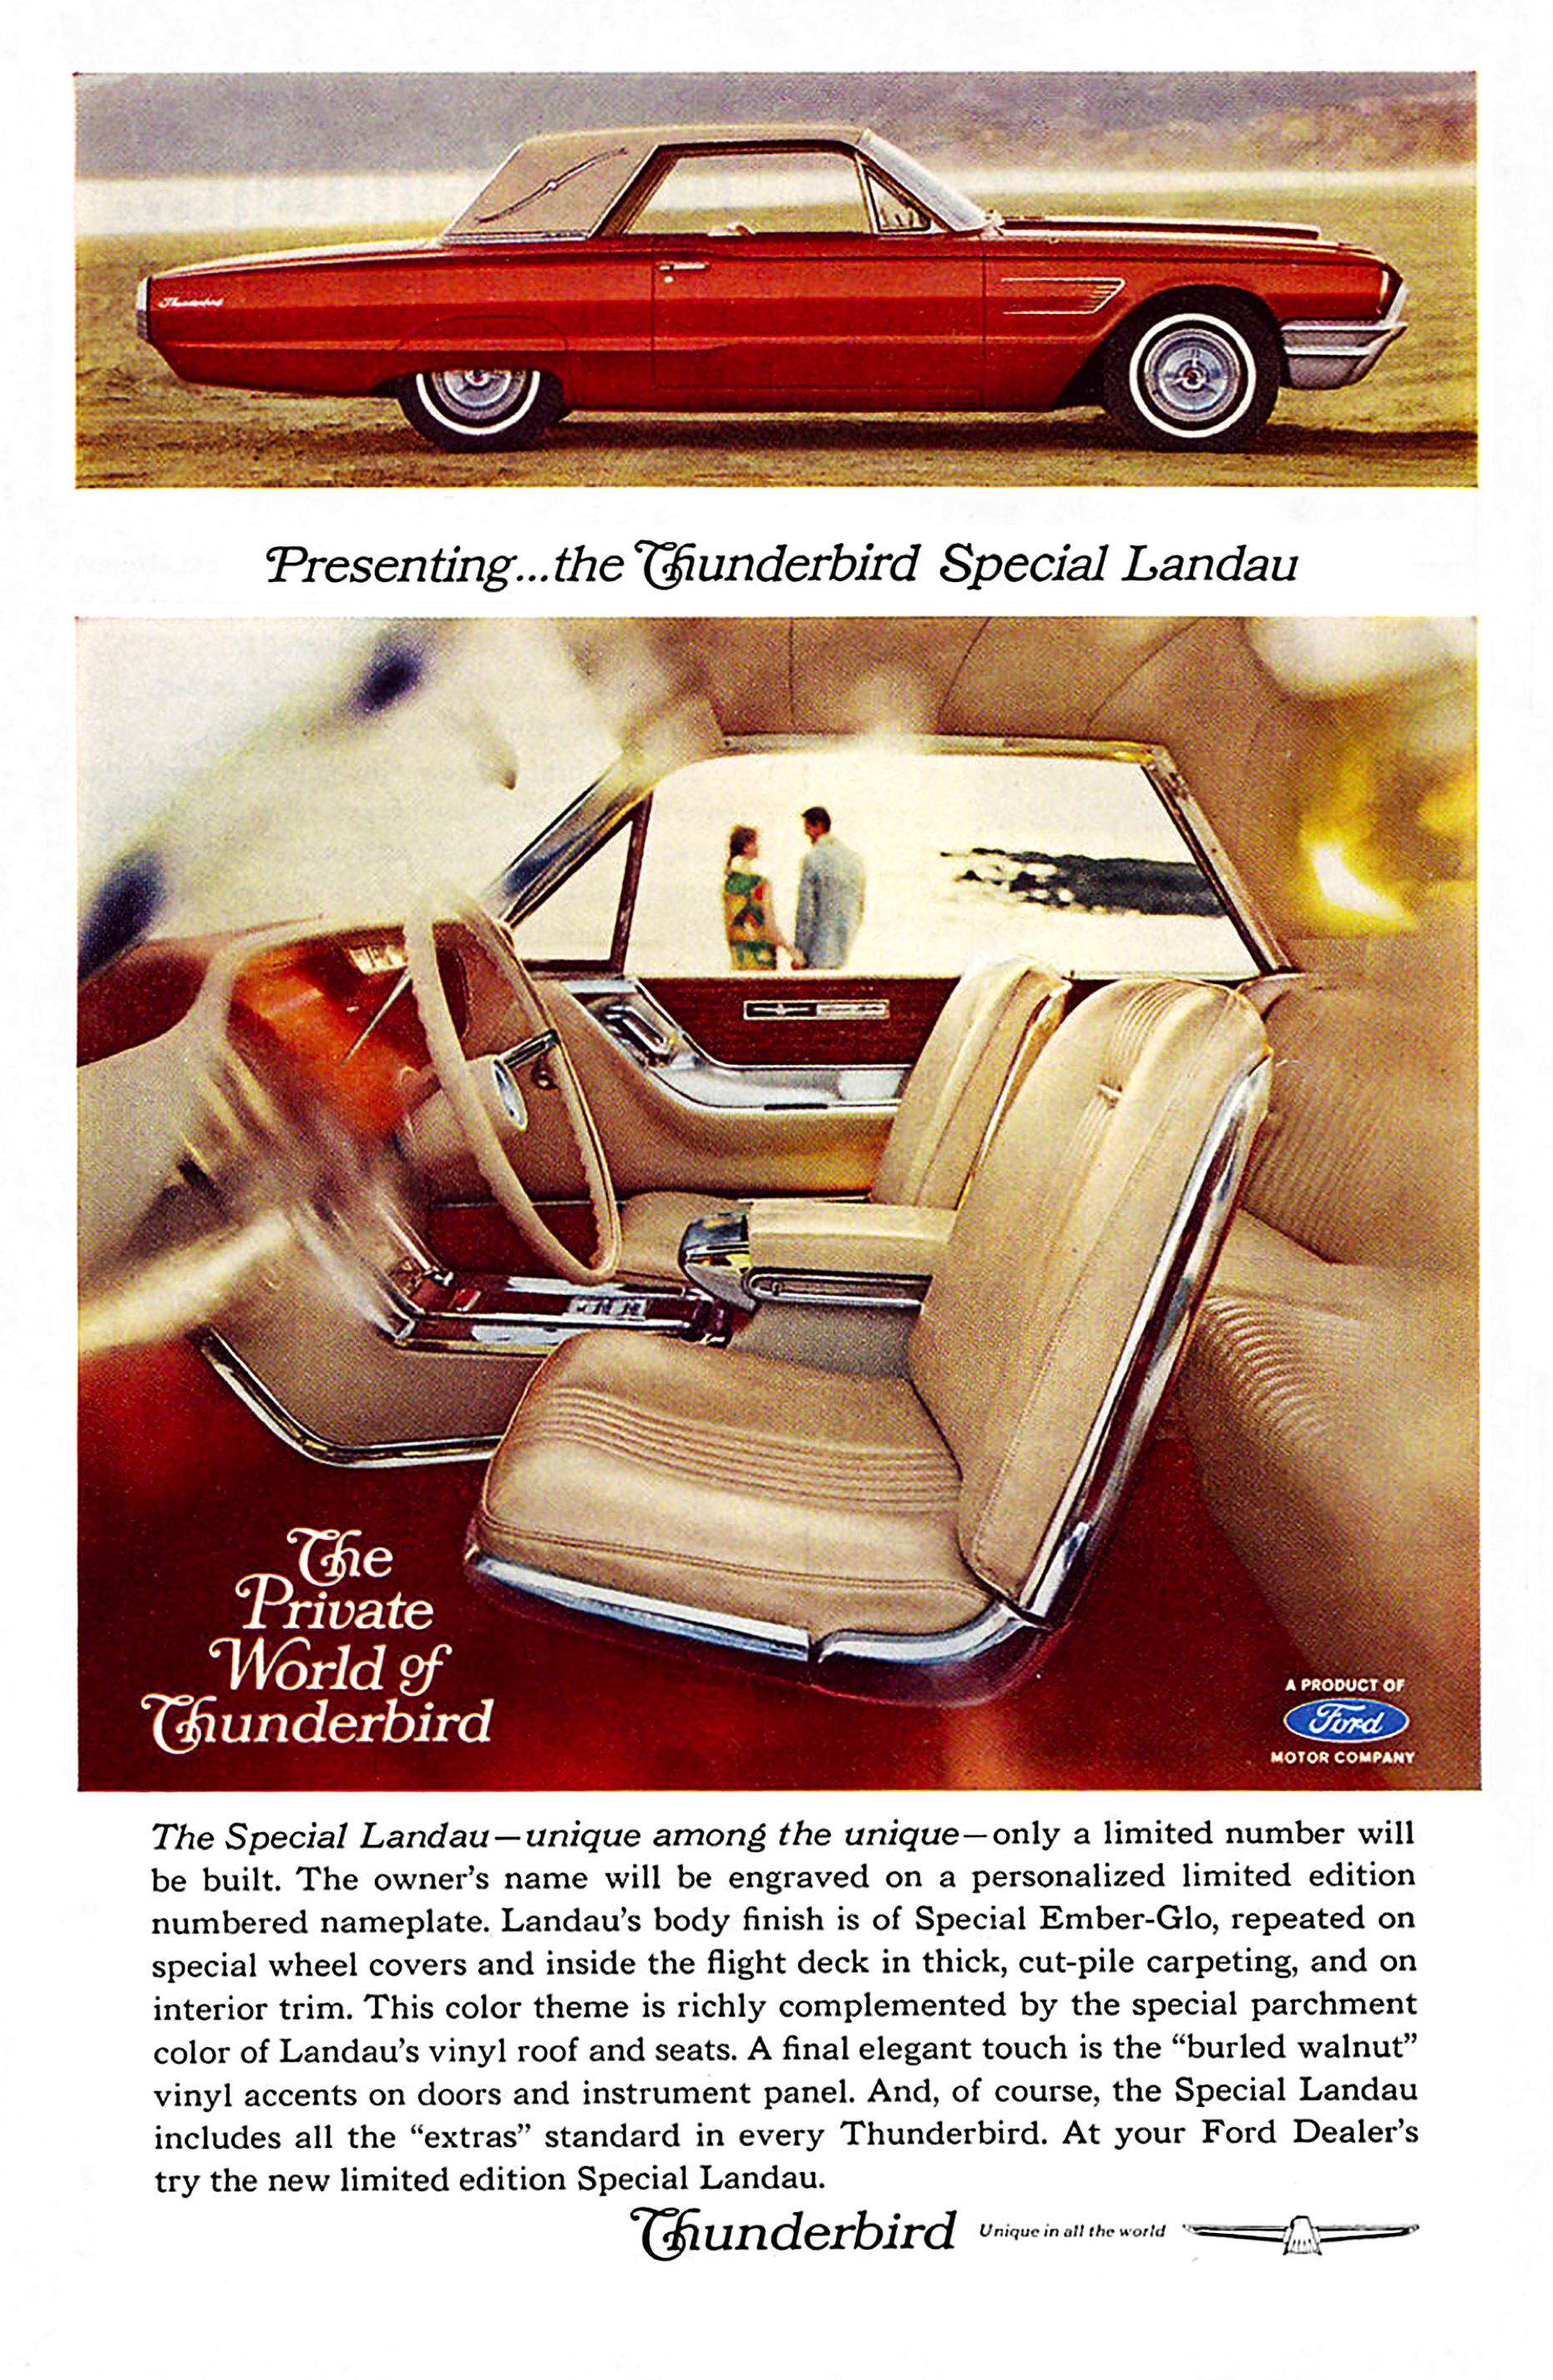 1965 Ford Ad Thunderbird "Presenting the Thunderbird Special Landau"